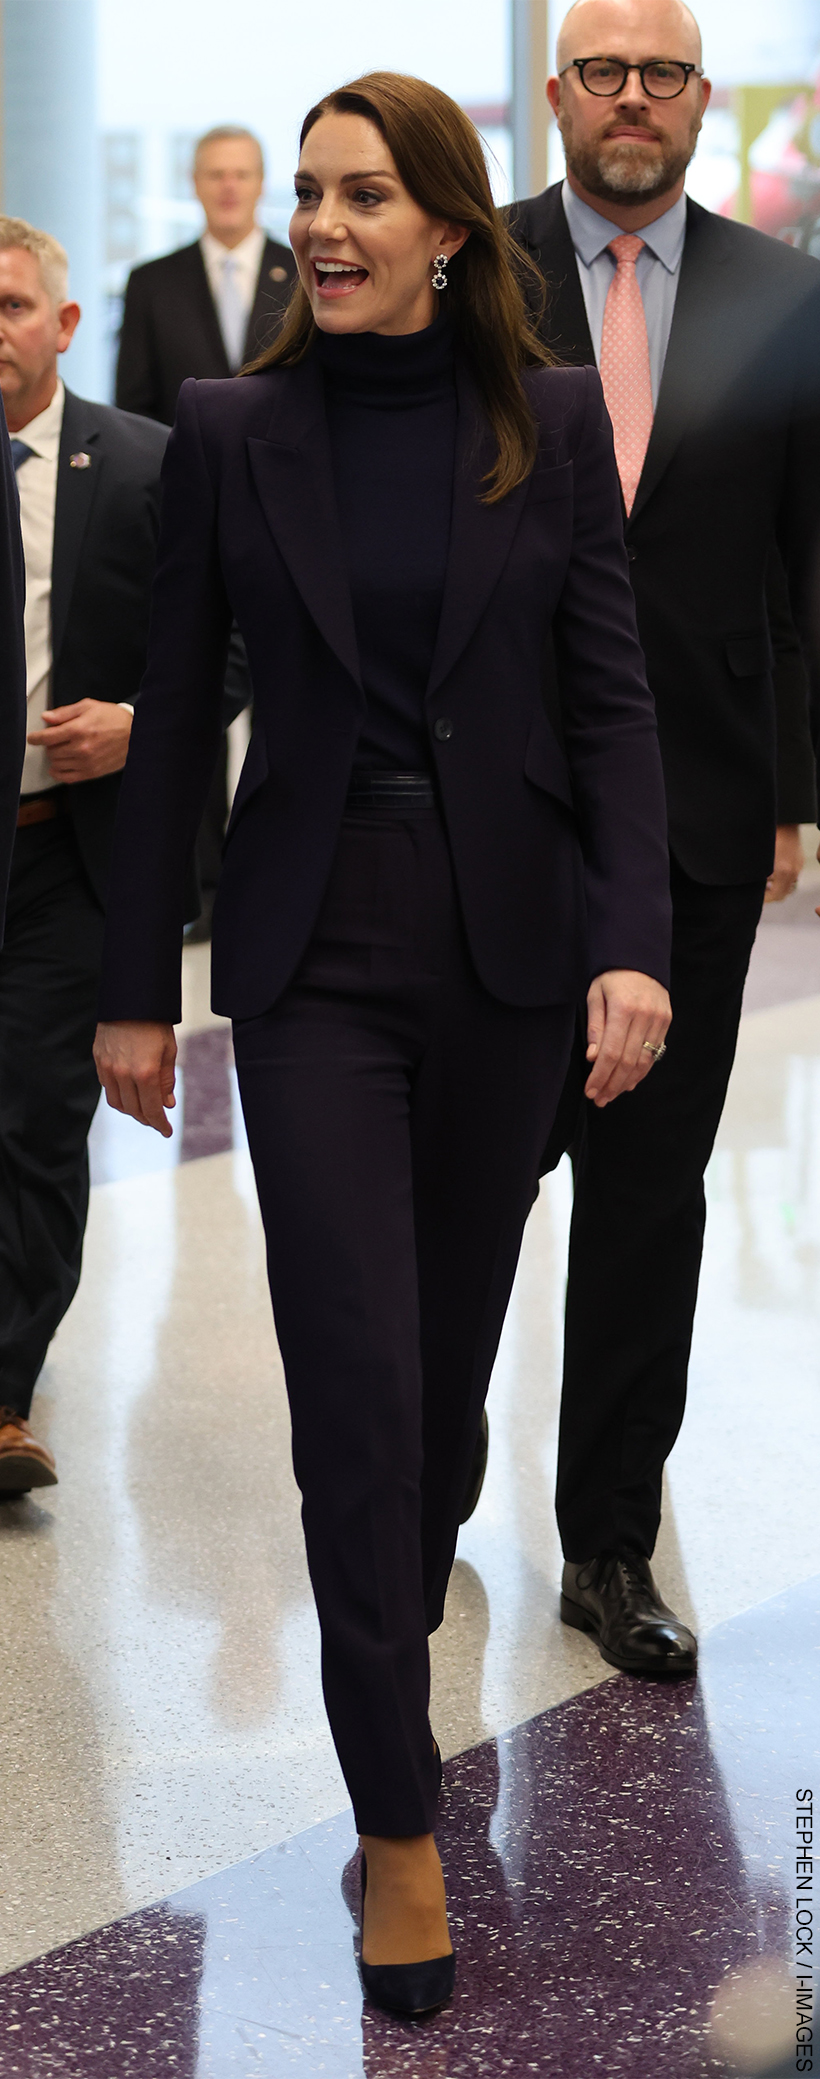 Kate Middleton arrives in Boston wearing a suit! Princess kicks